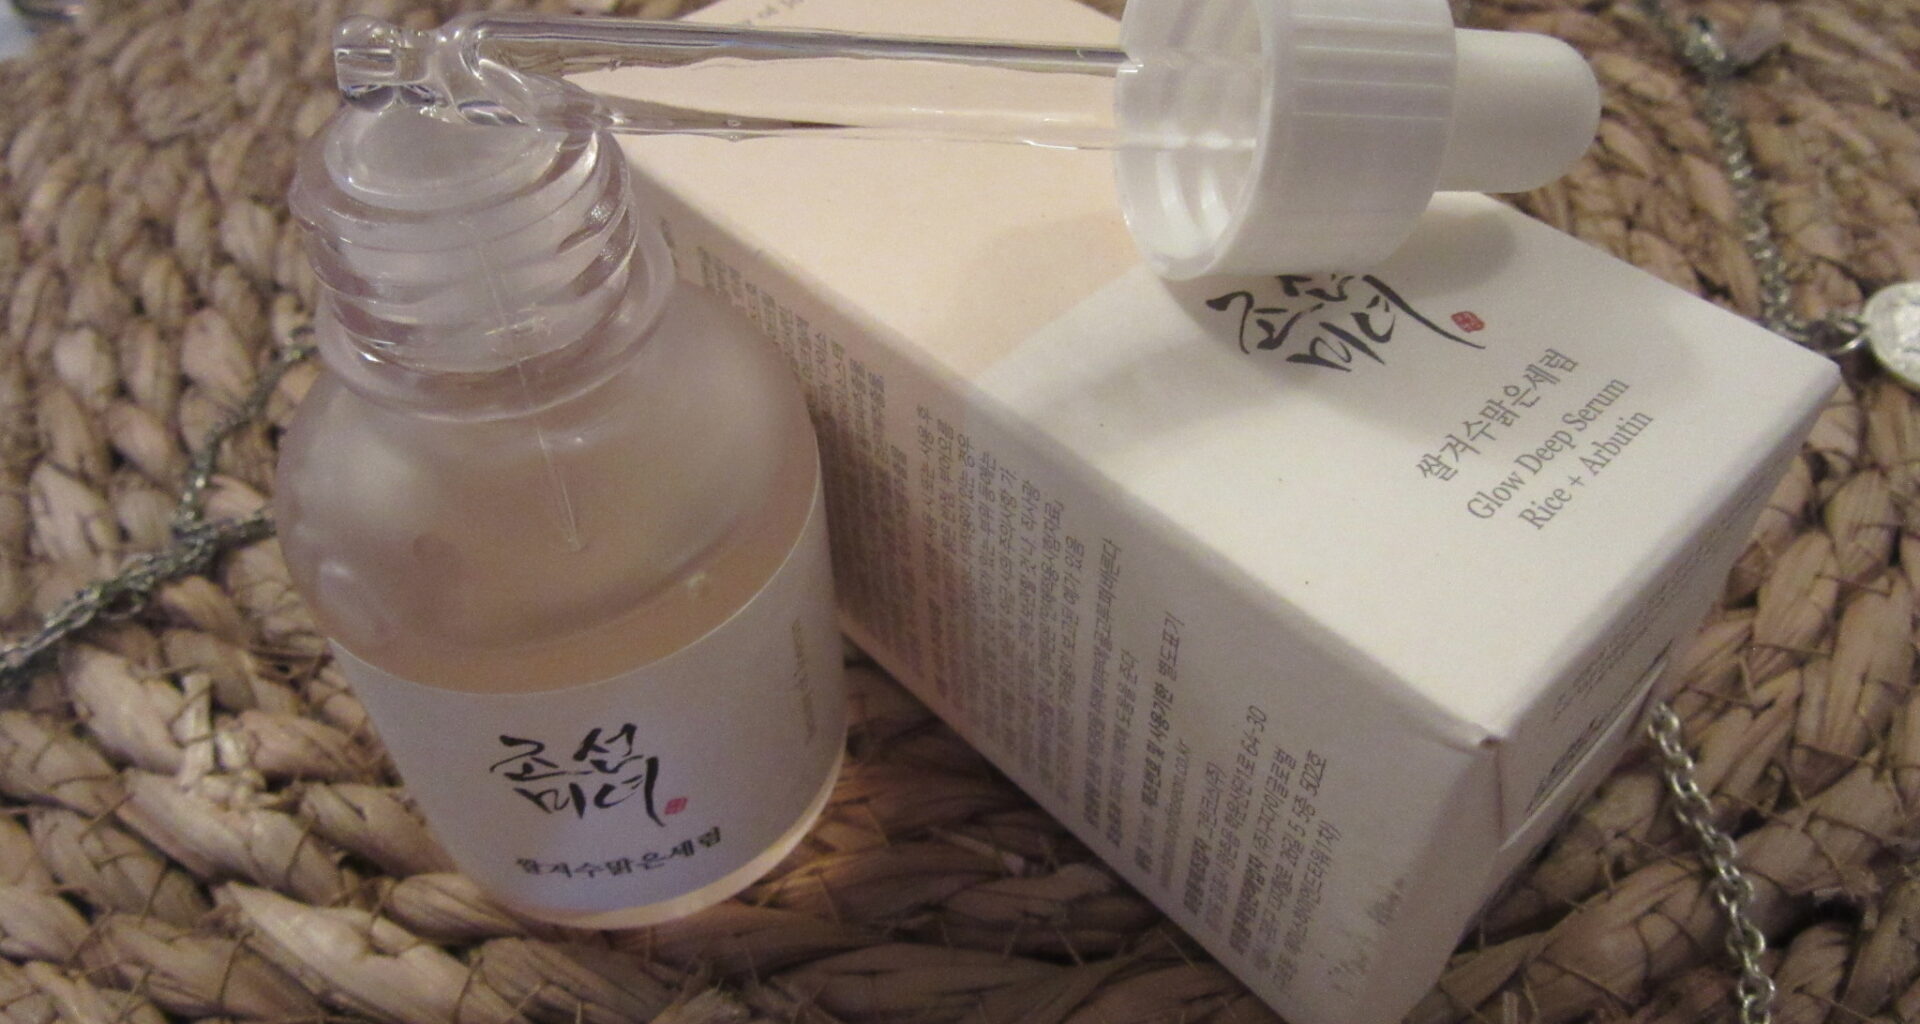 Beauty of Joseon Glow deep serum